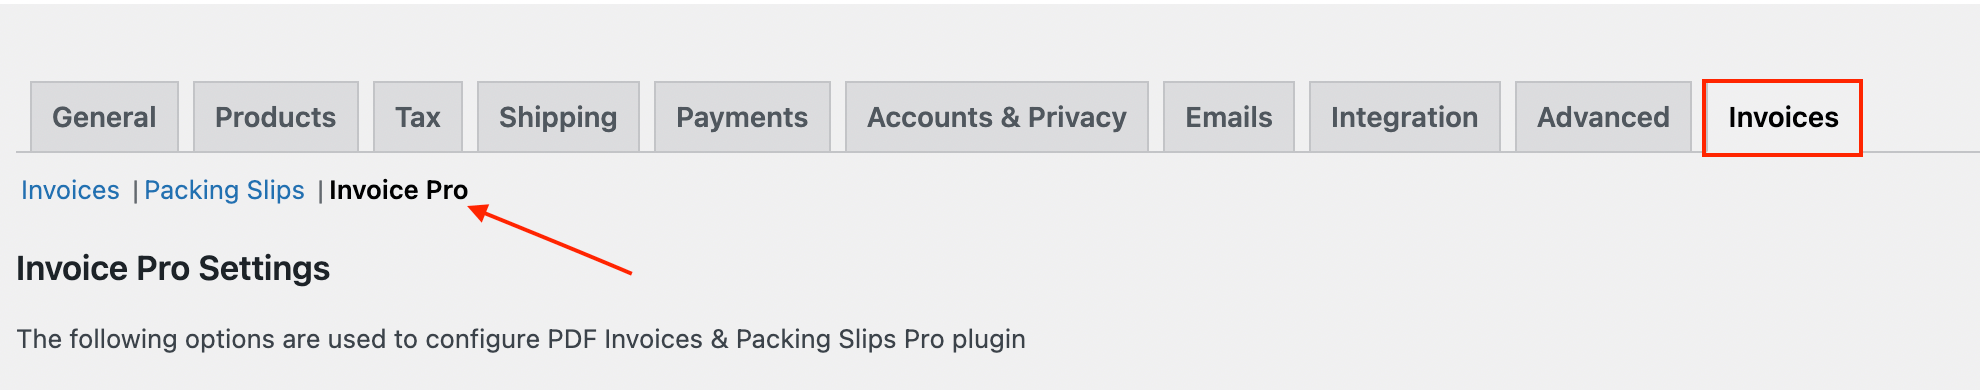 Invoice pro settings tab